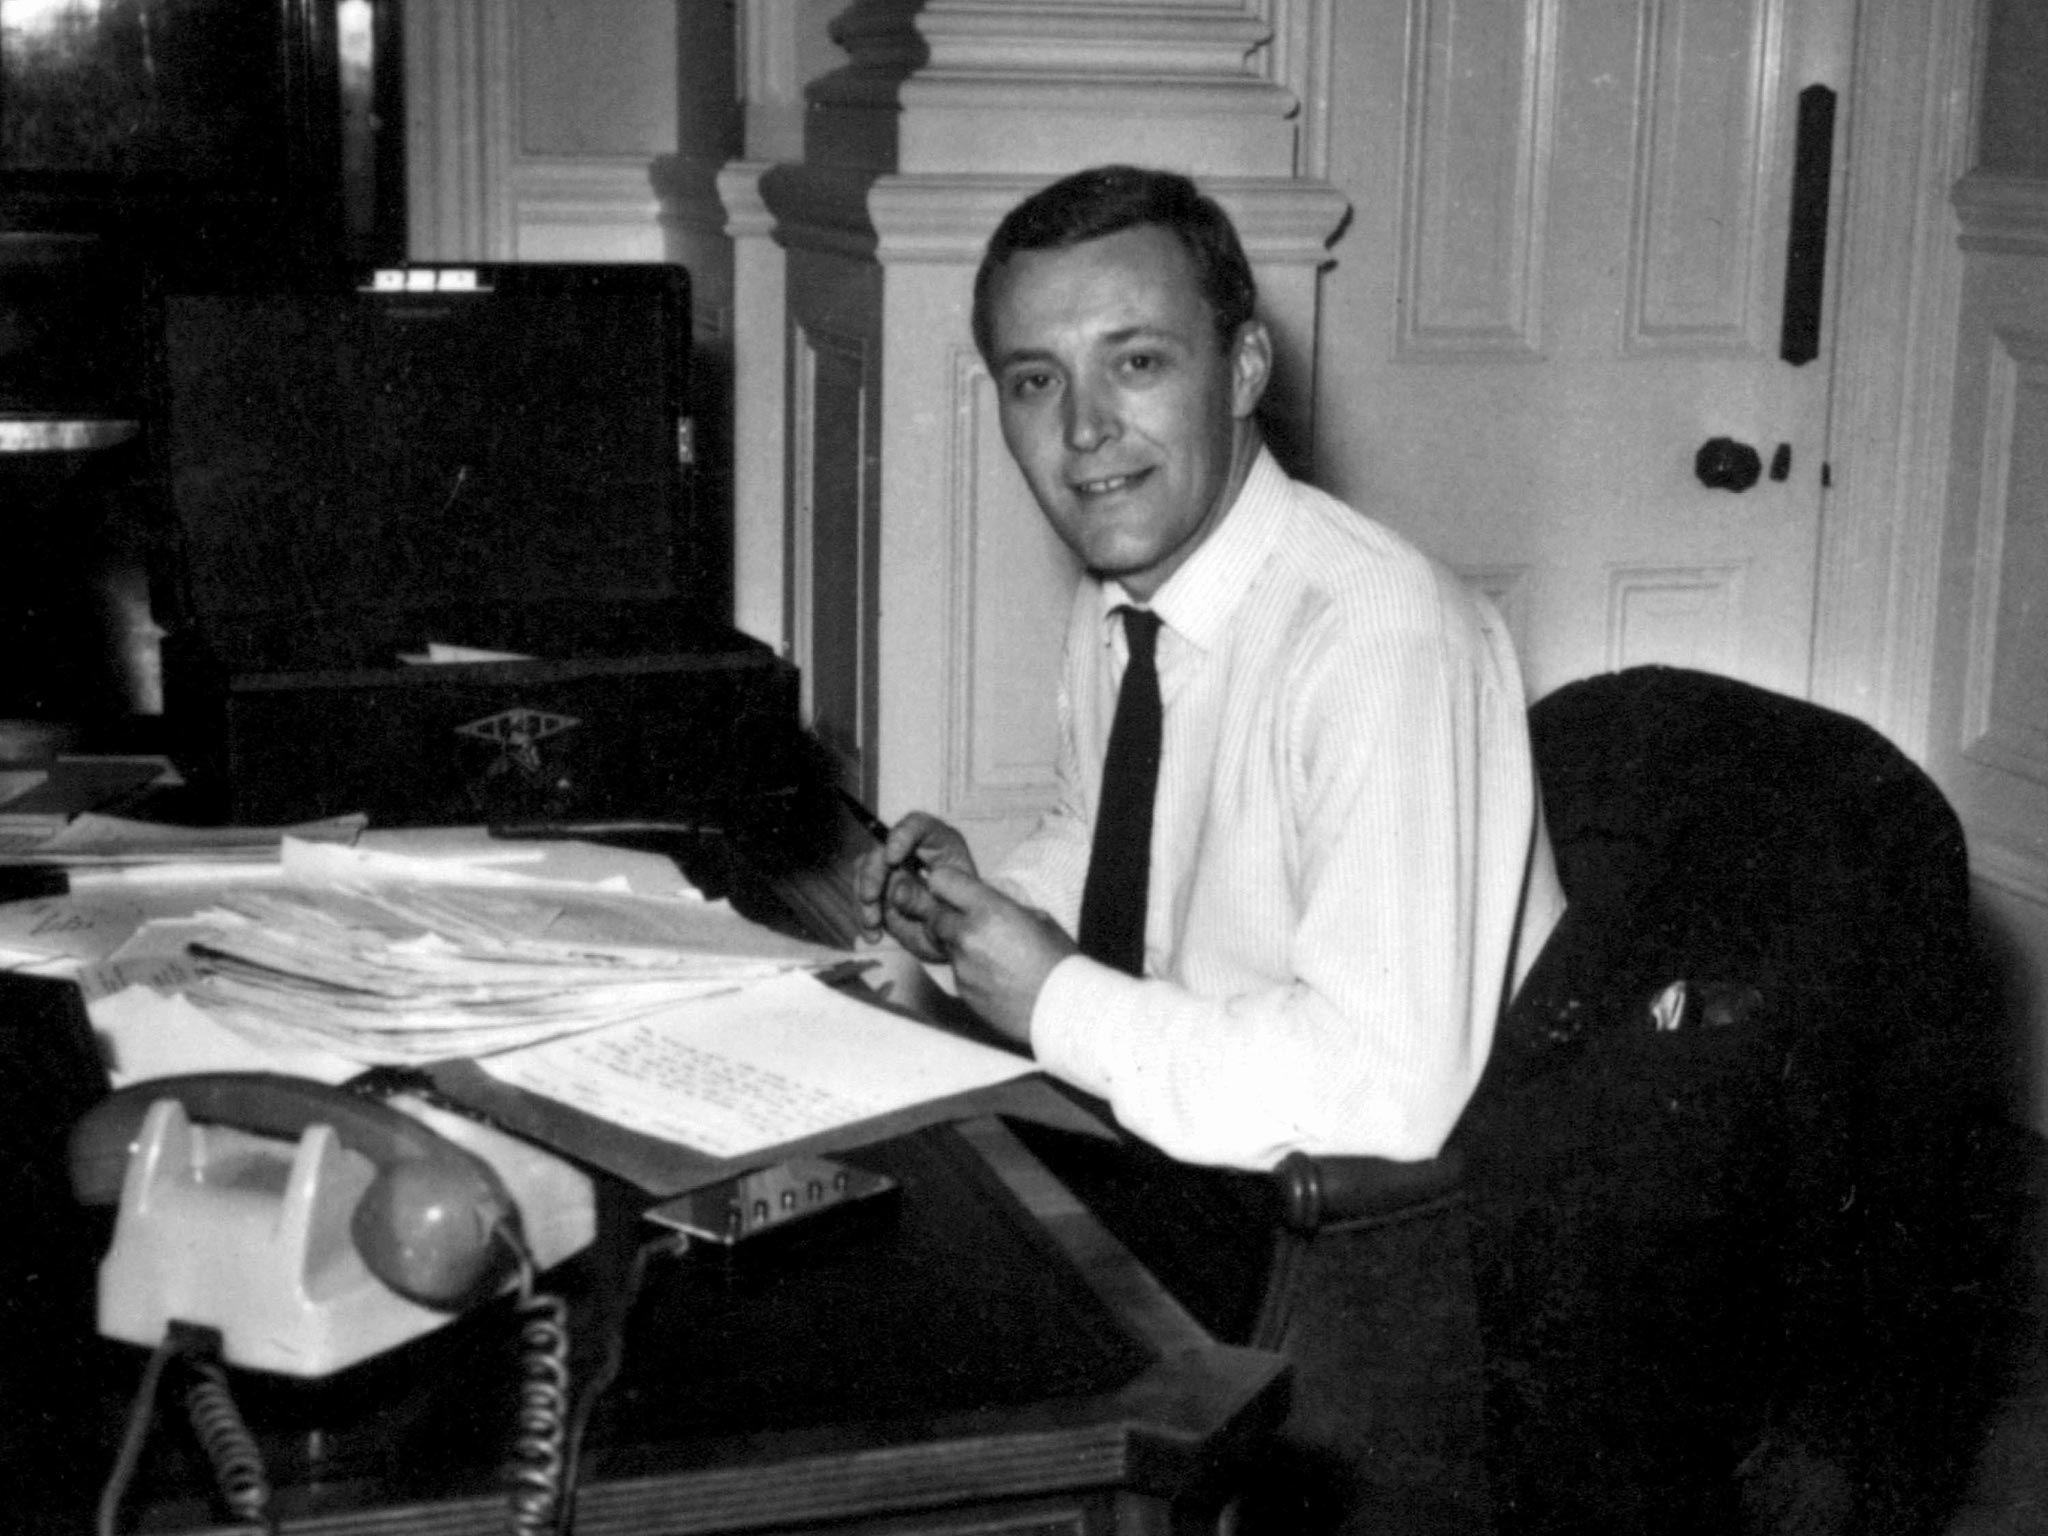 Tony Benn in 1964